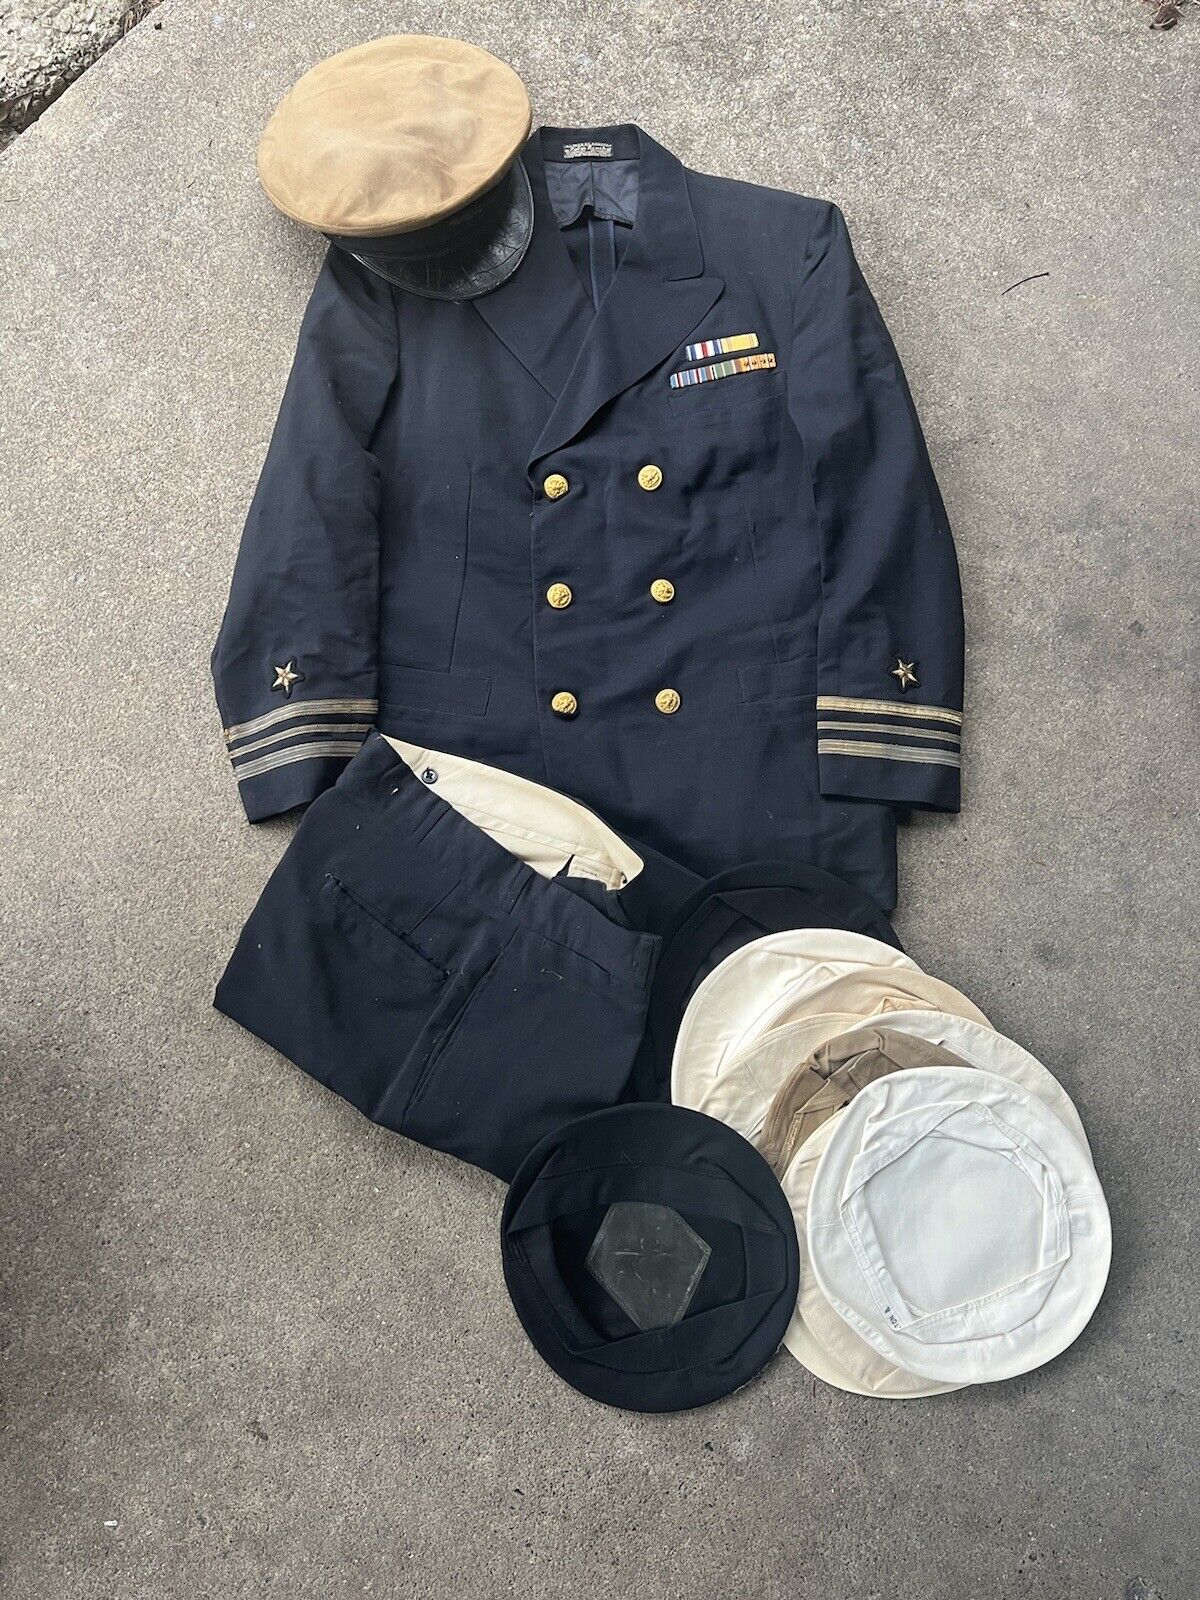 WW2 US Naval Officers Uniform Grouping Identified (U658